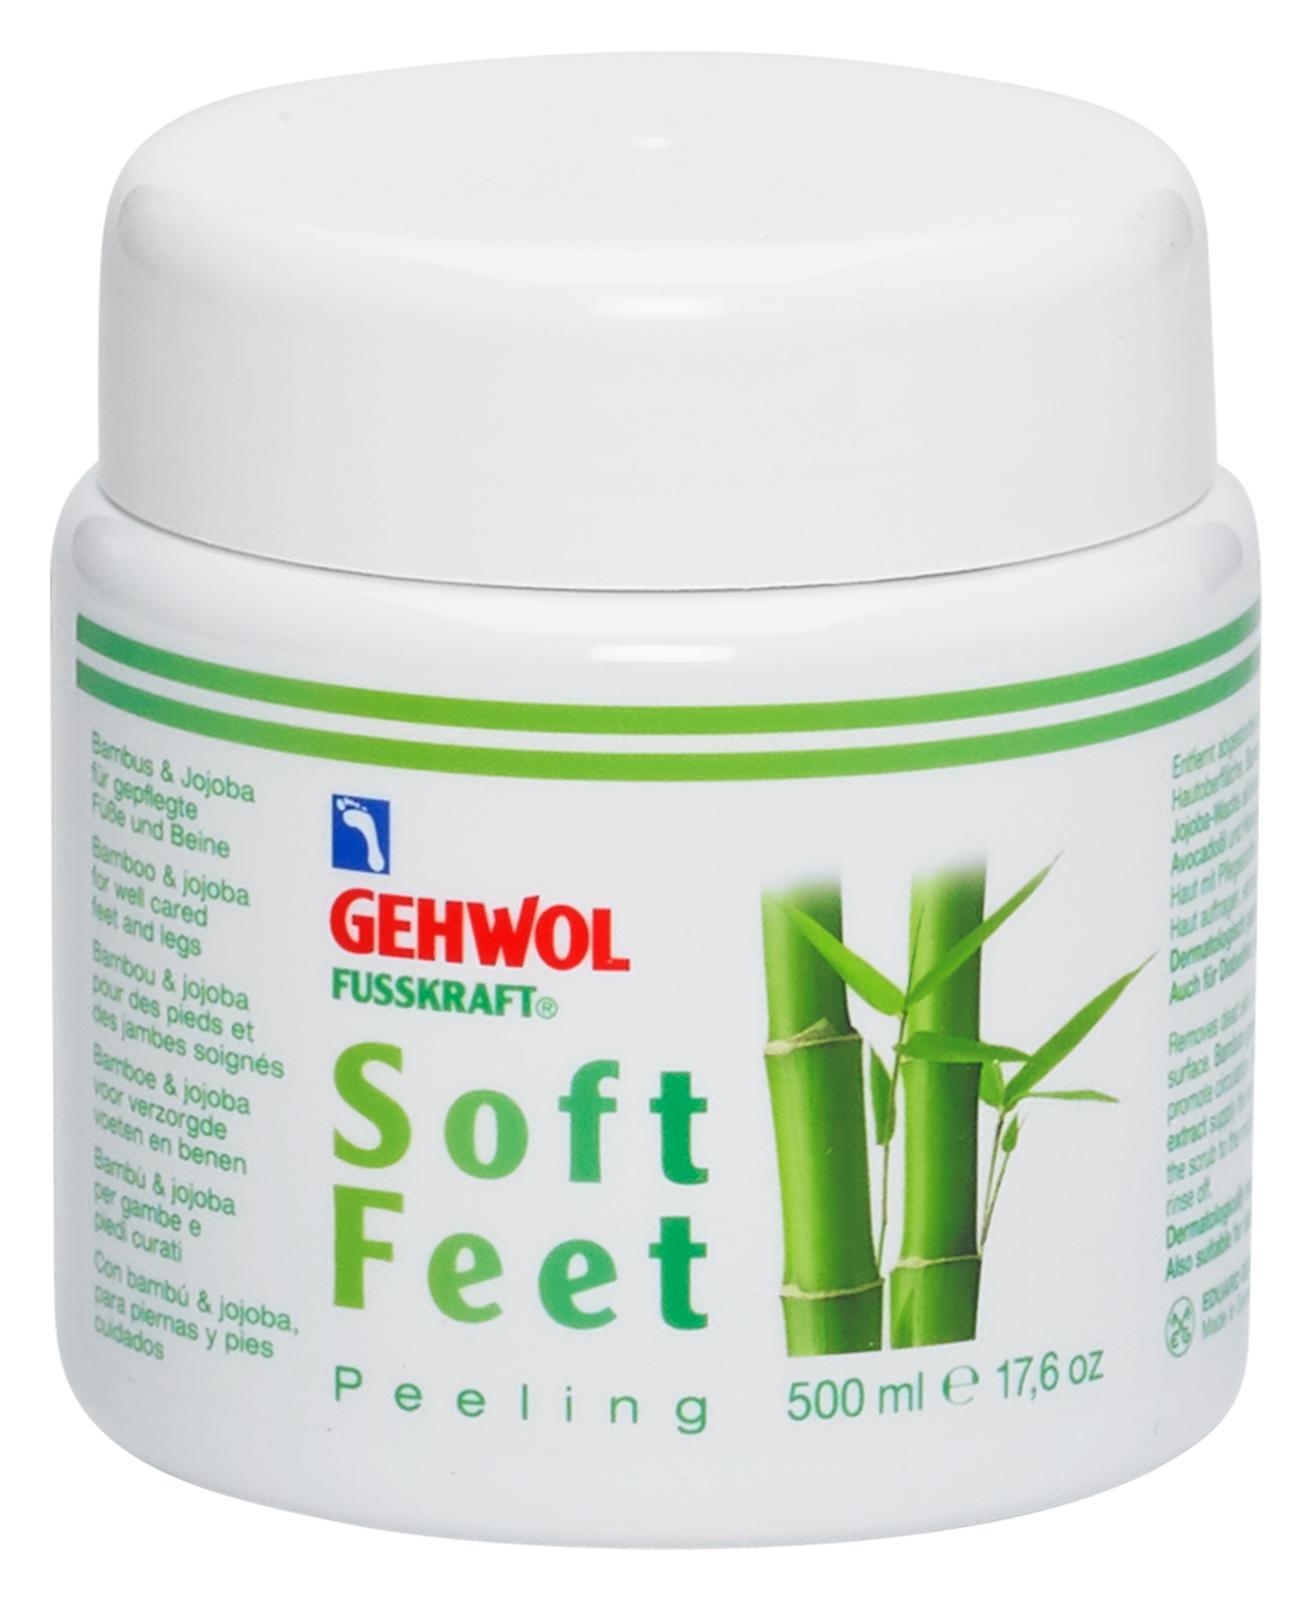 GEHWOL FUSSKRAFT Soft Feet Peeling 500 ml